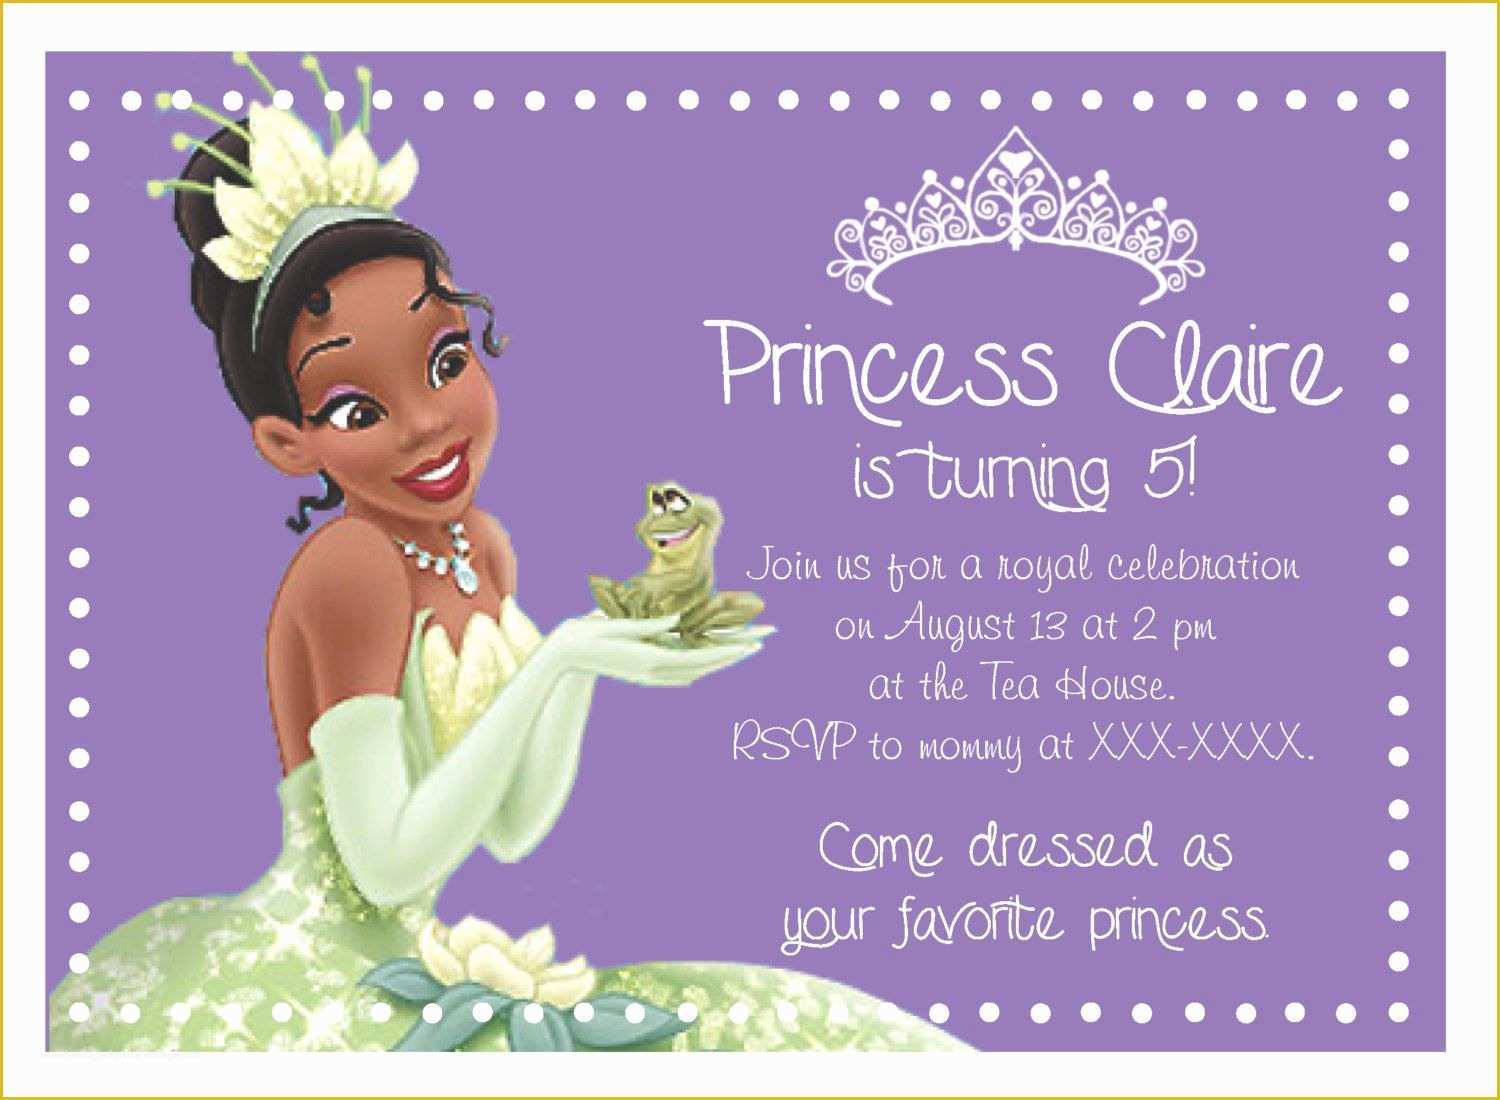 Free Princess Tiana Invitation Template Of Princess Tiana Invitations Cupcake toppers and Banner $6